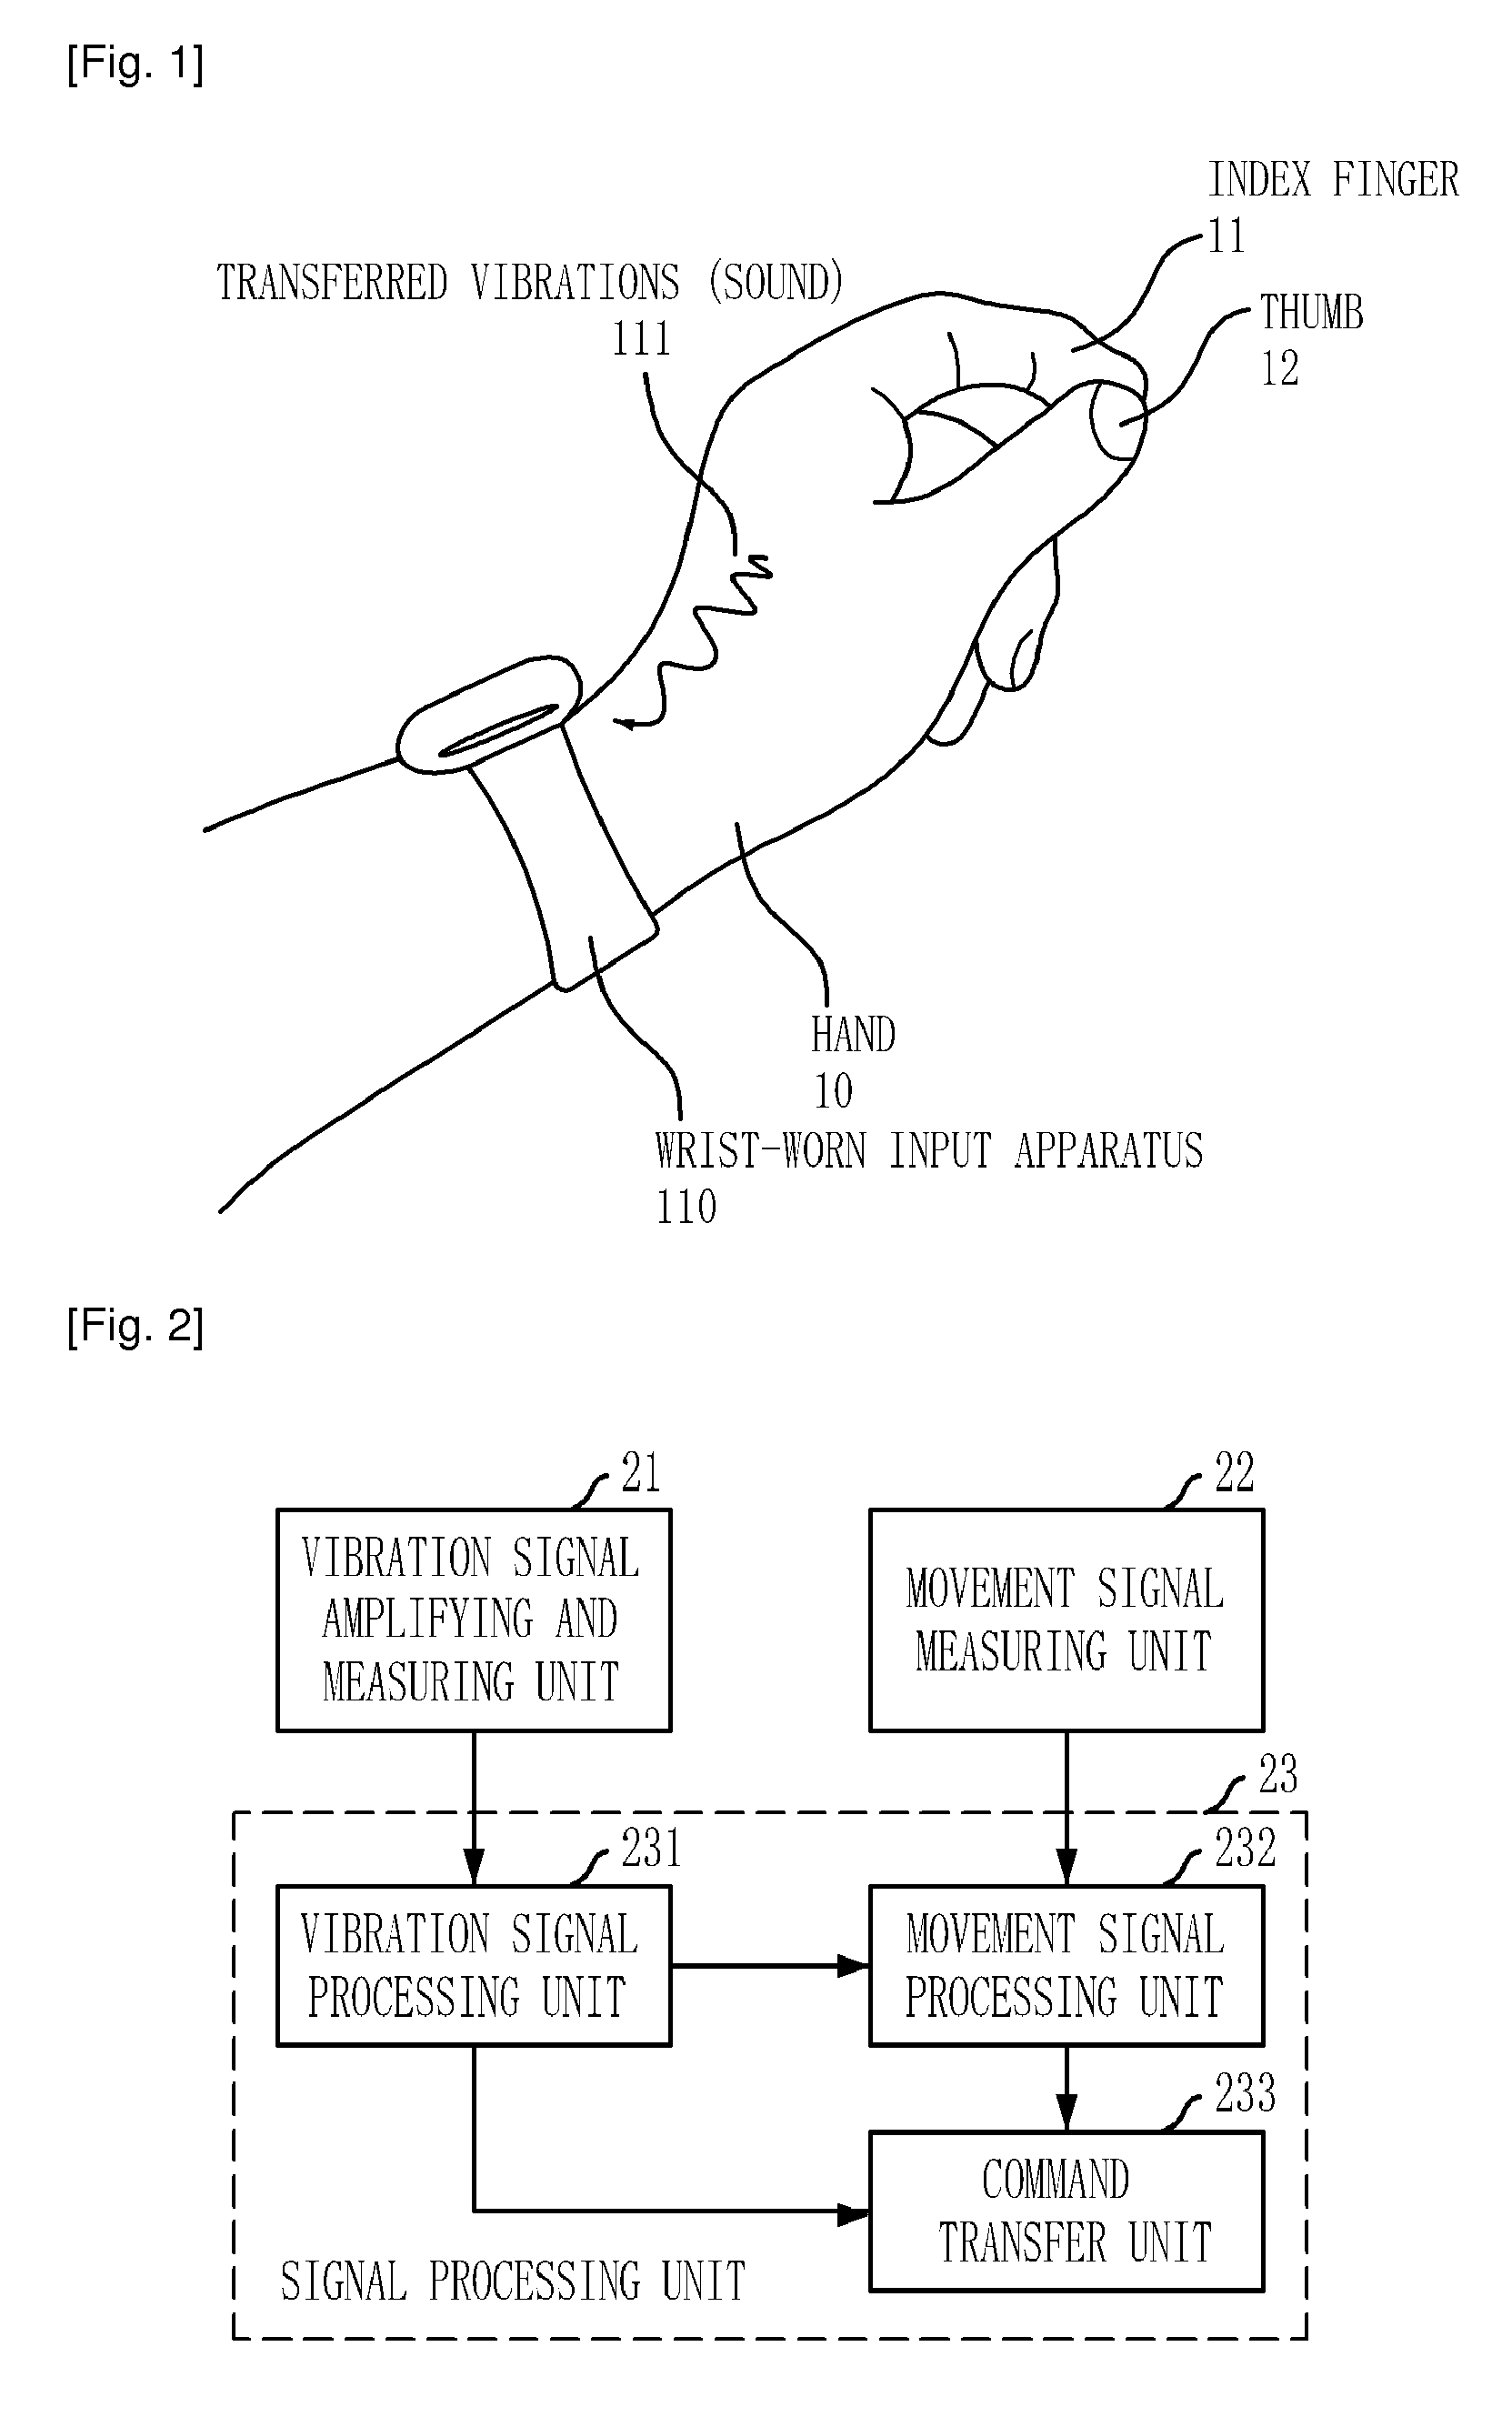 Wrist-worn input apparatus and method